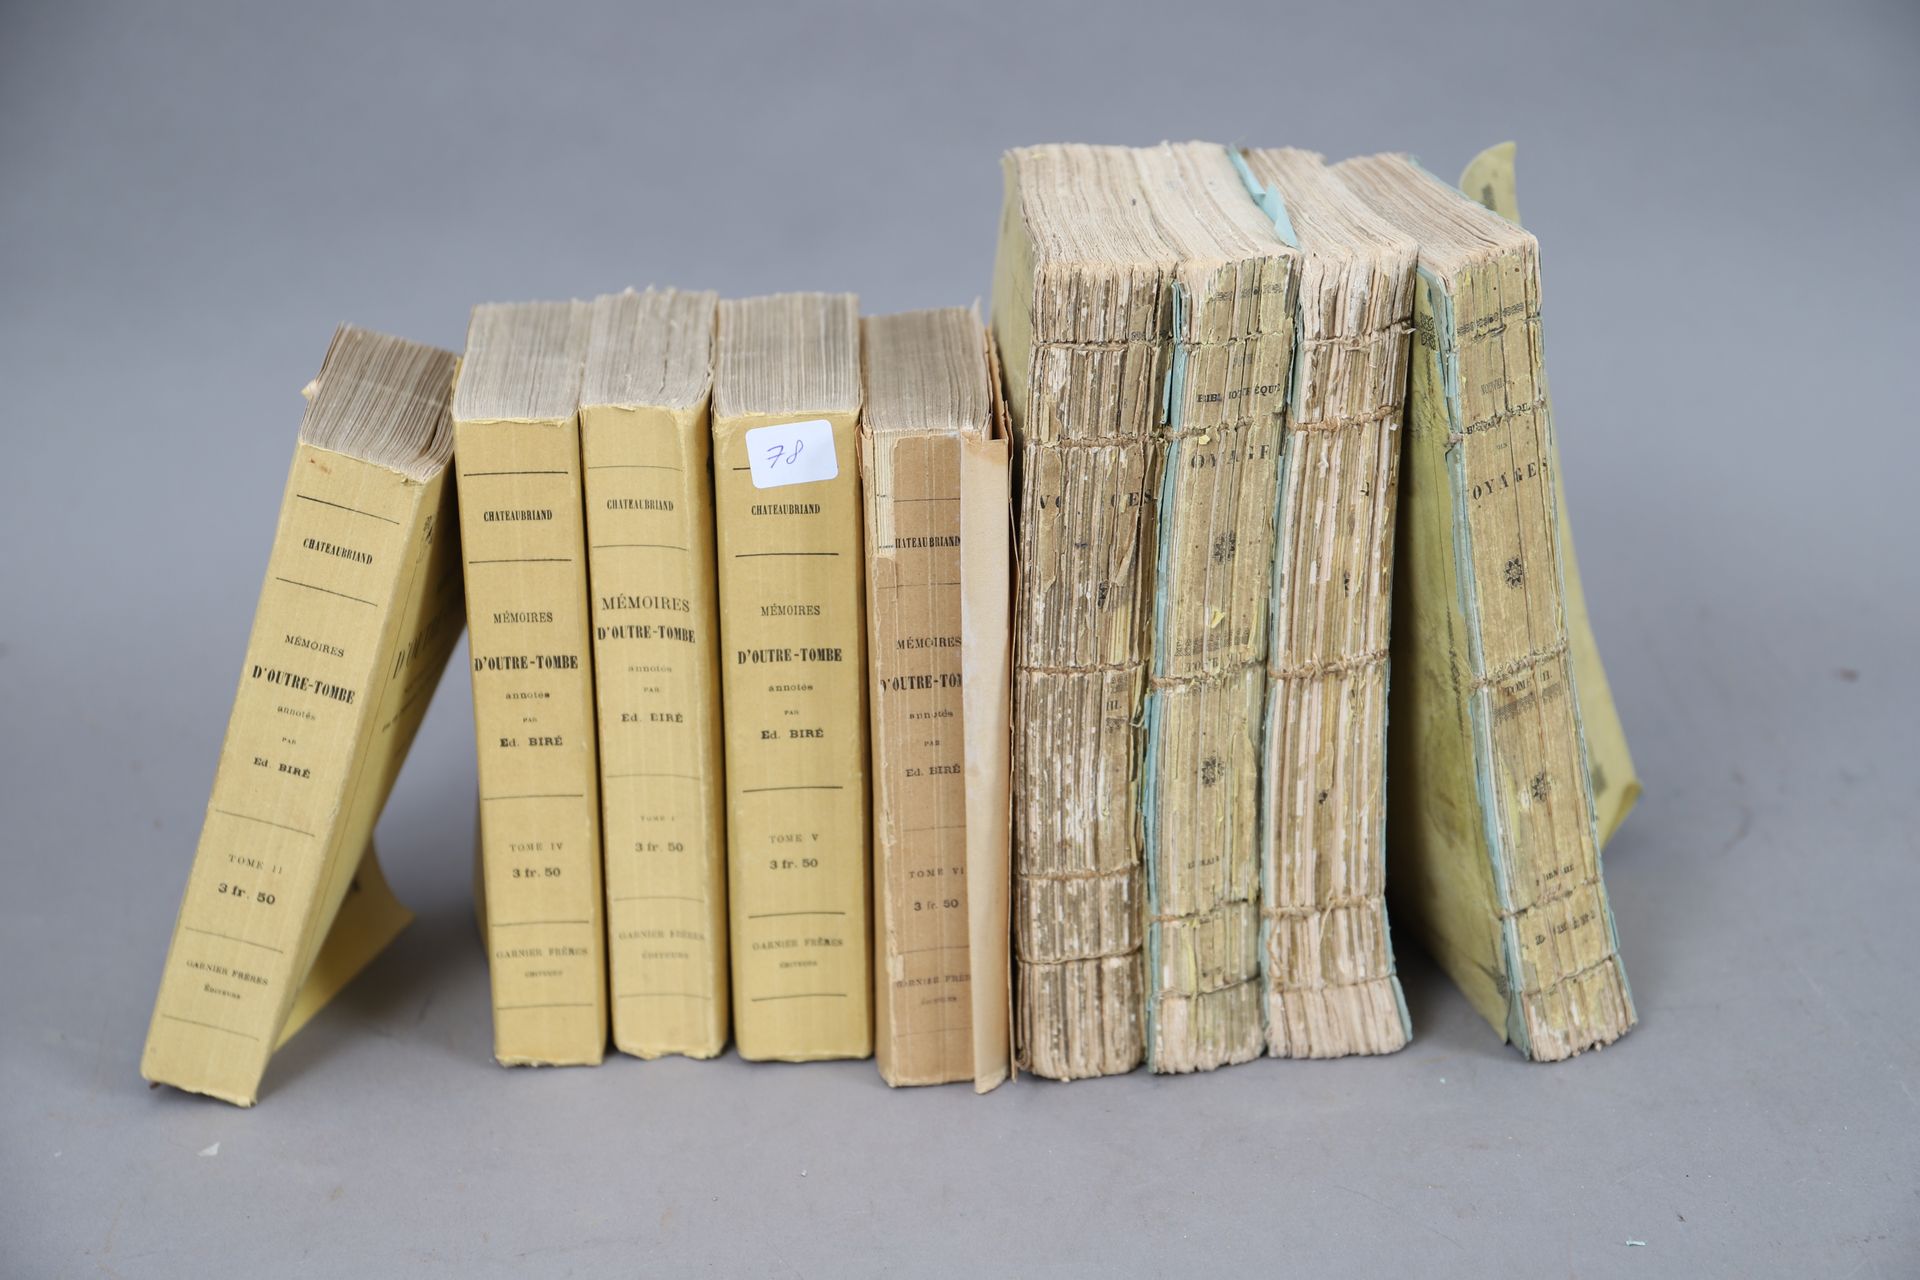 Null CHATEAUBRIAND - MEMOIRES d'OUTRE TOMBE

9 volumi rilegati.